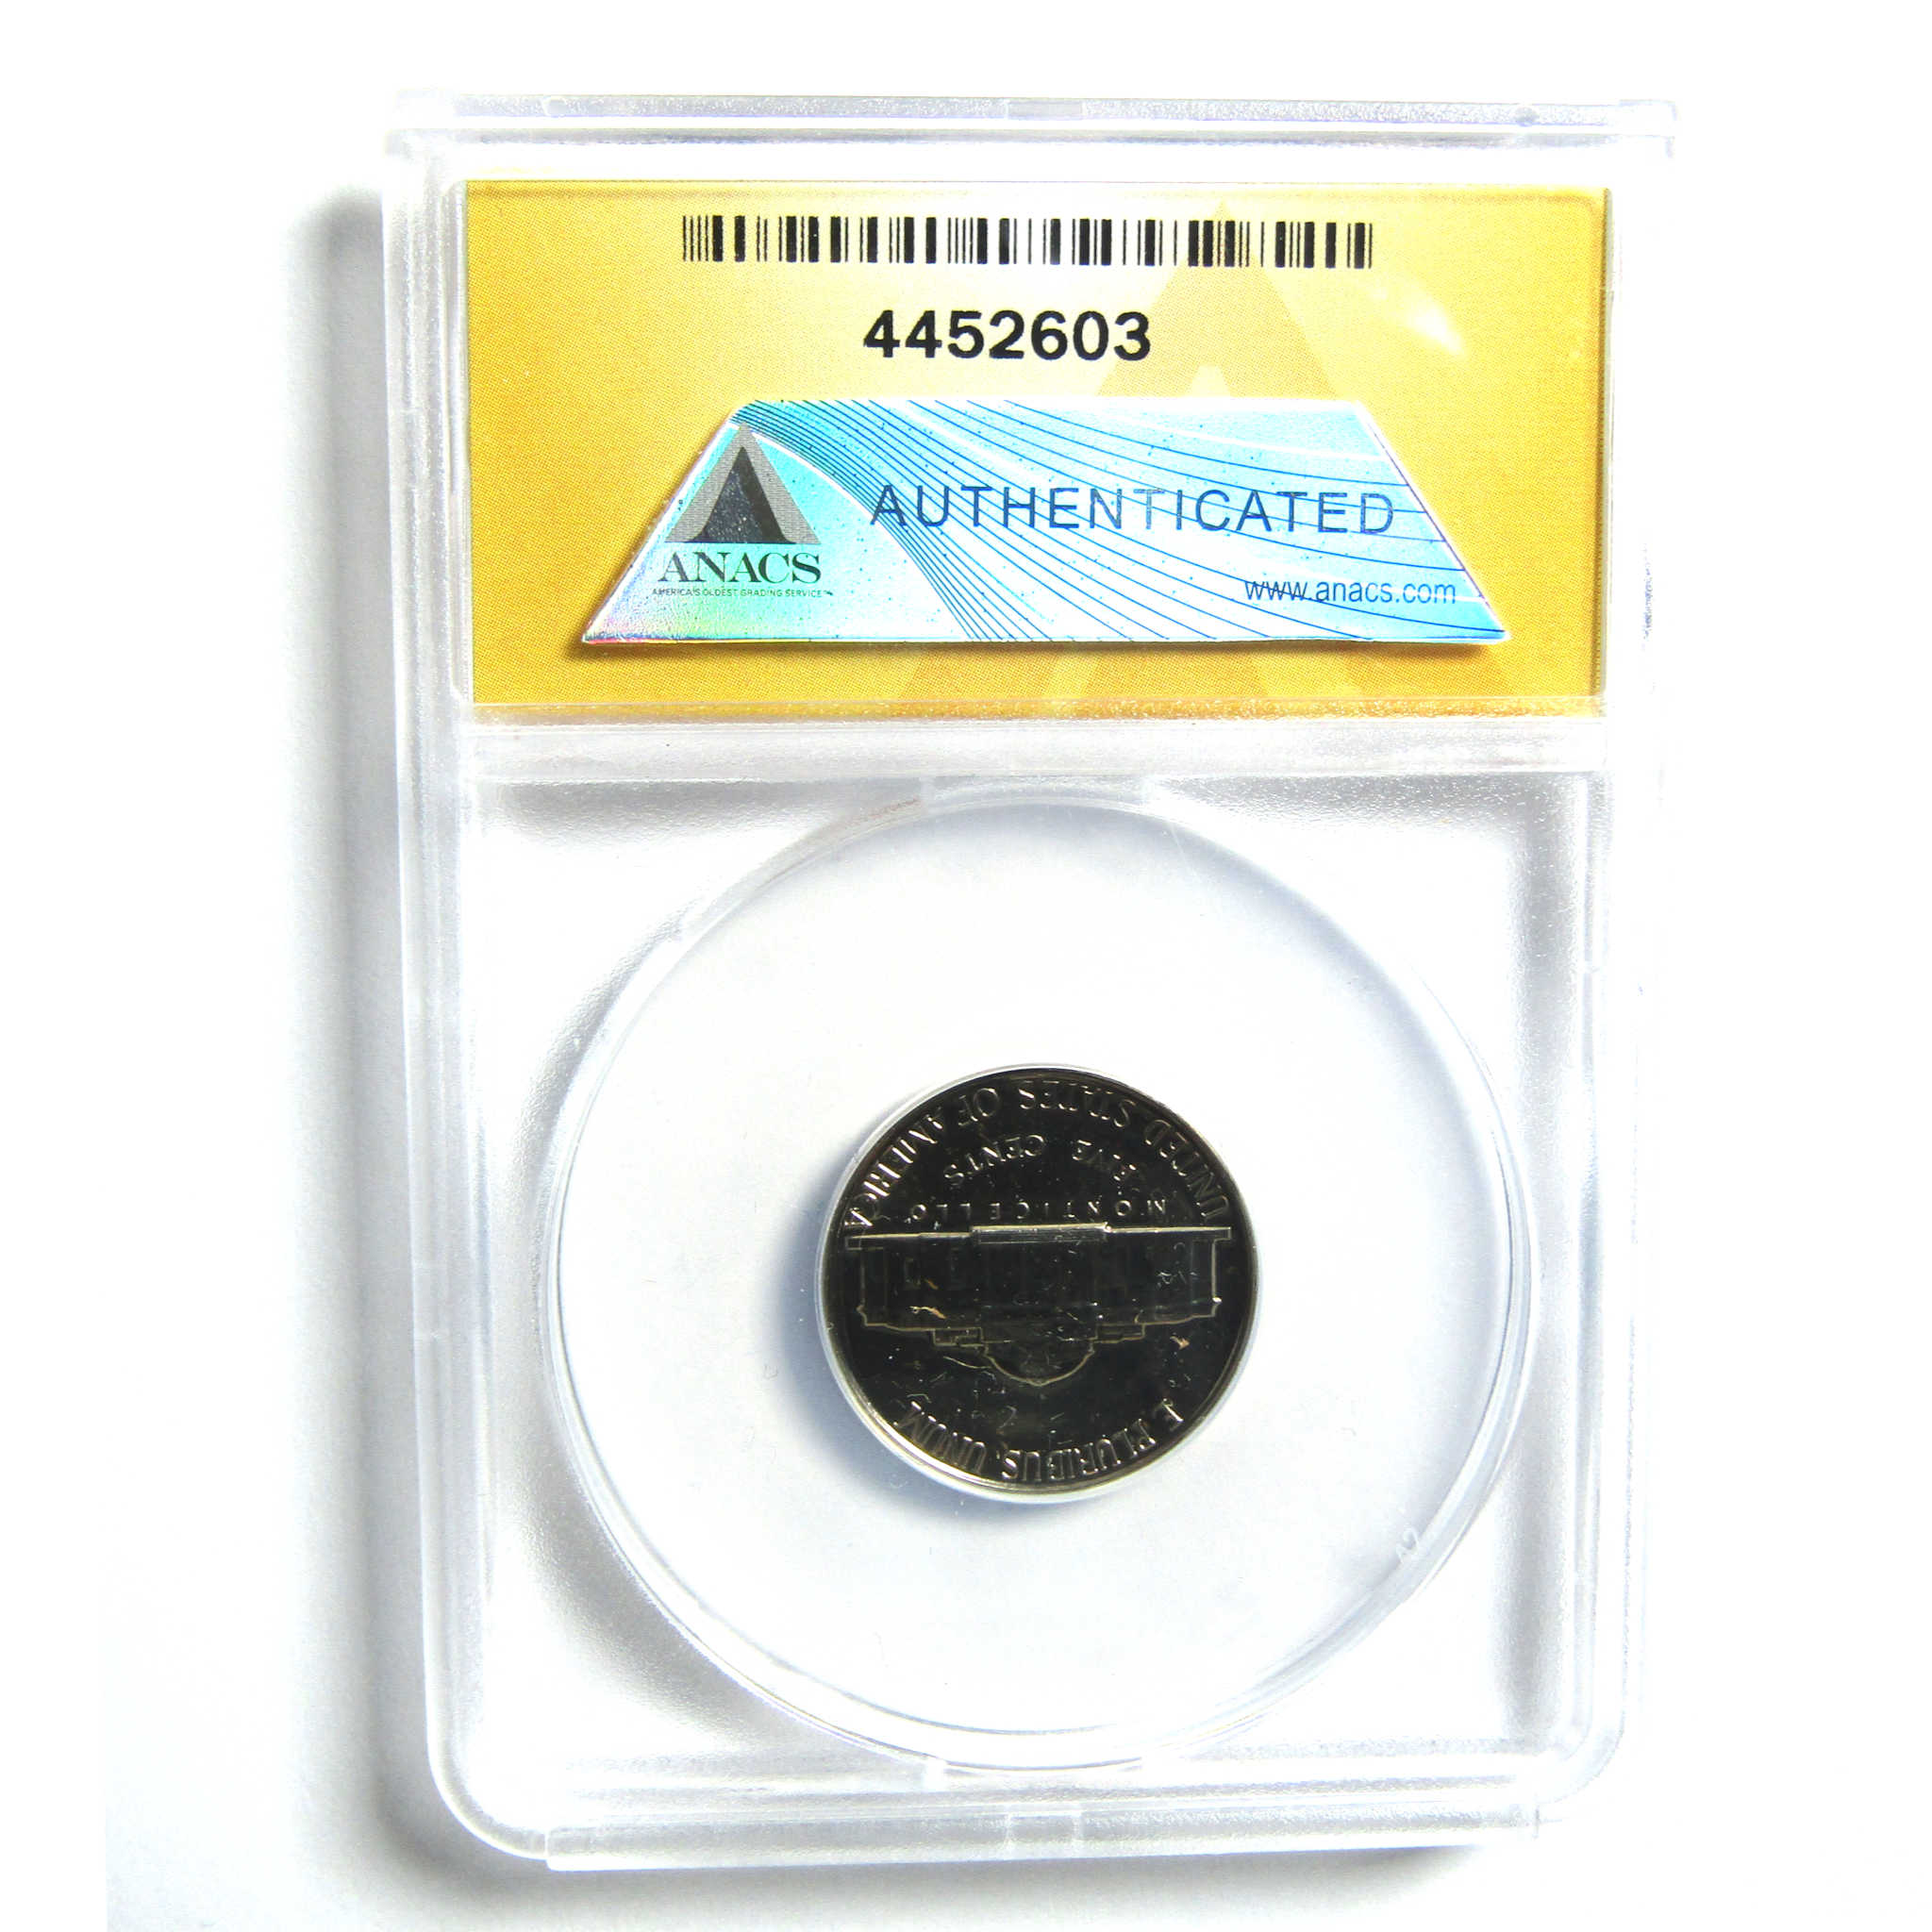 1957 Jefferson Nickel PF 66 ANACS 5c Proof Coin SKU:CPC5054